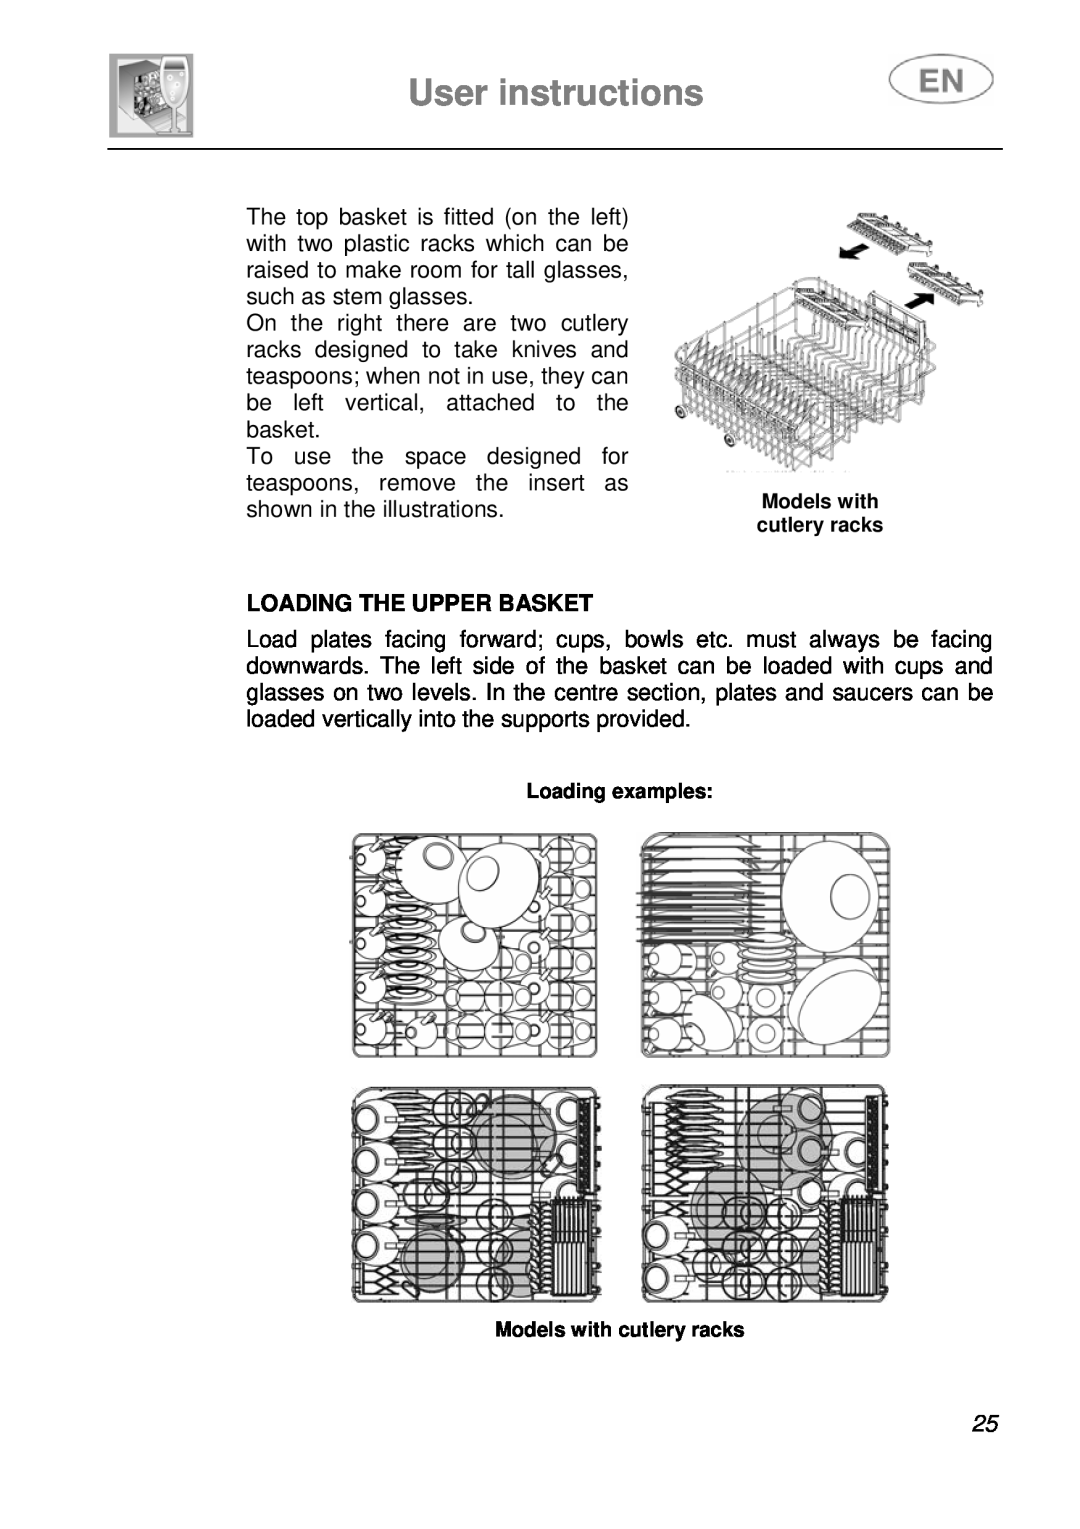 Smeg PL115NE, PL115X User instructions, Loading The Upper Basket, Loading examples Models with cutlery racks 